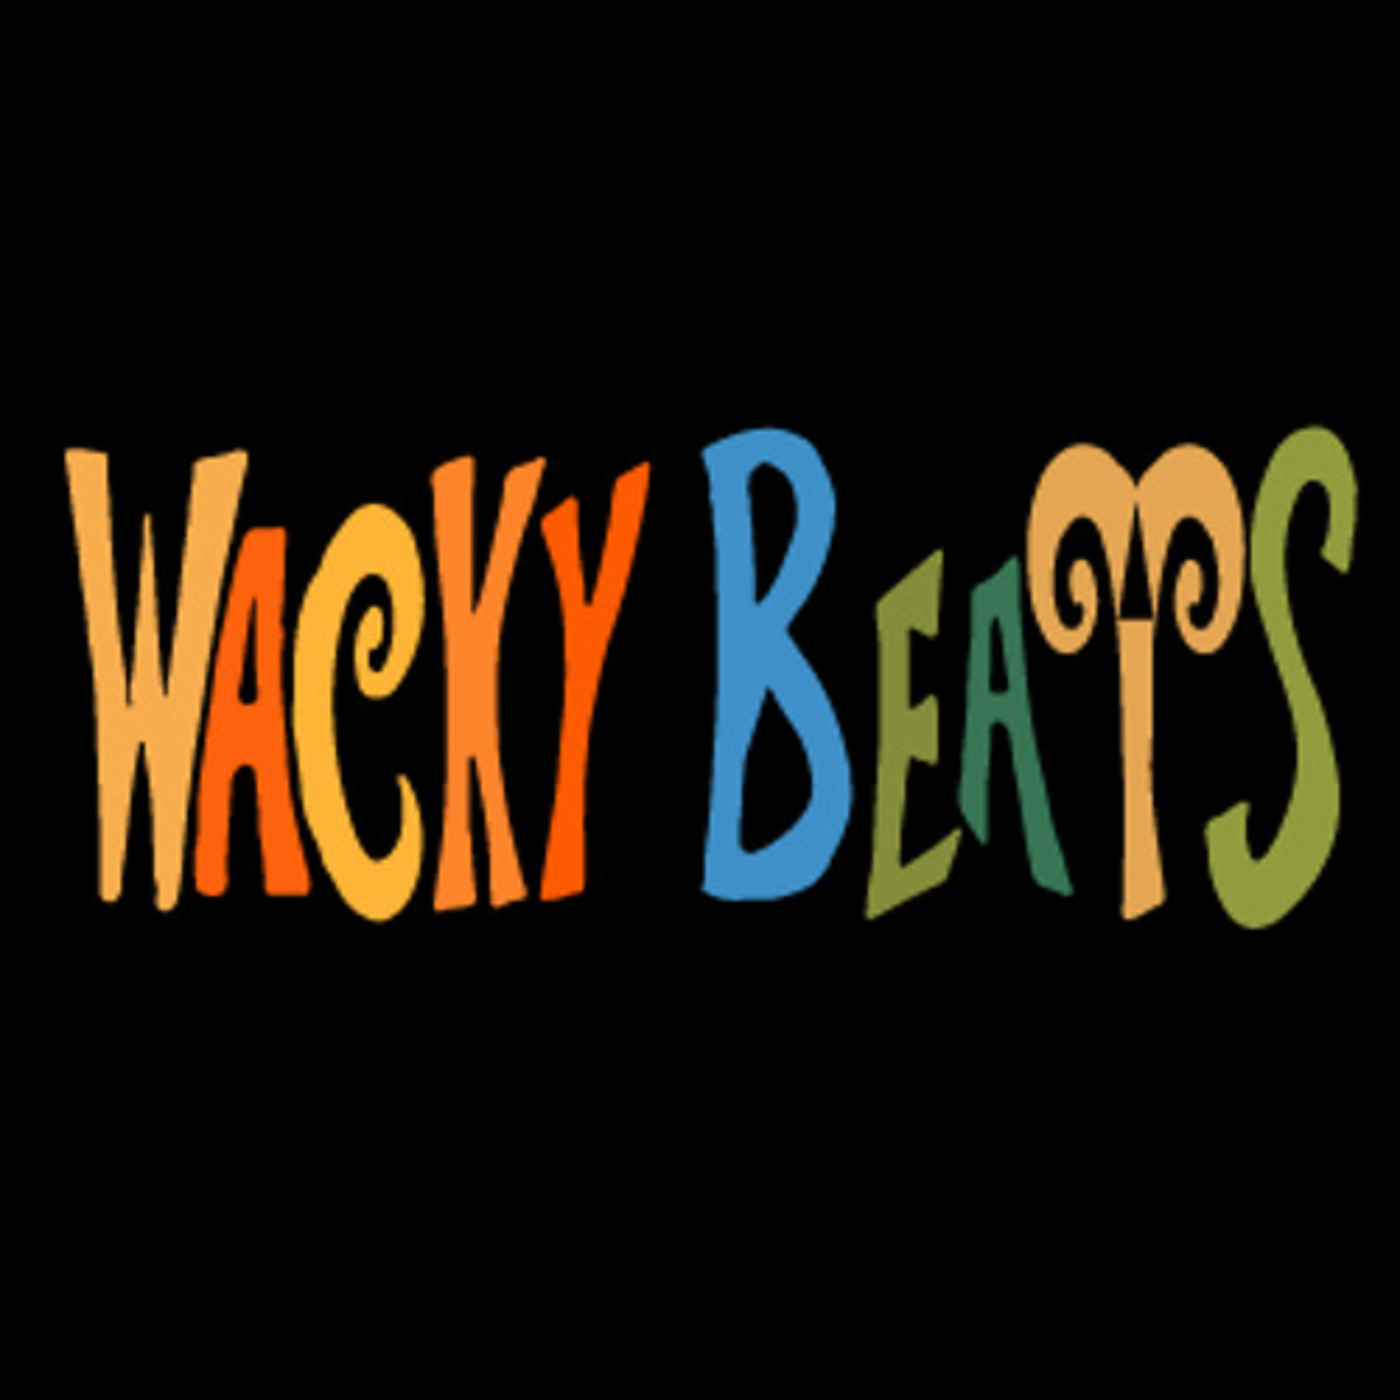 Episode 153: WACKY BEATS (CANALE)